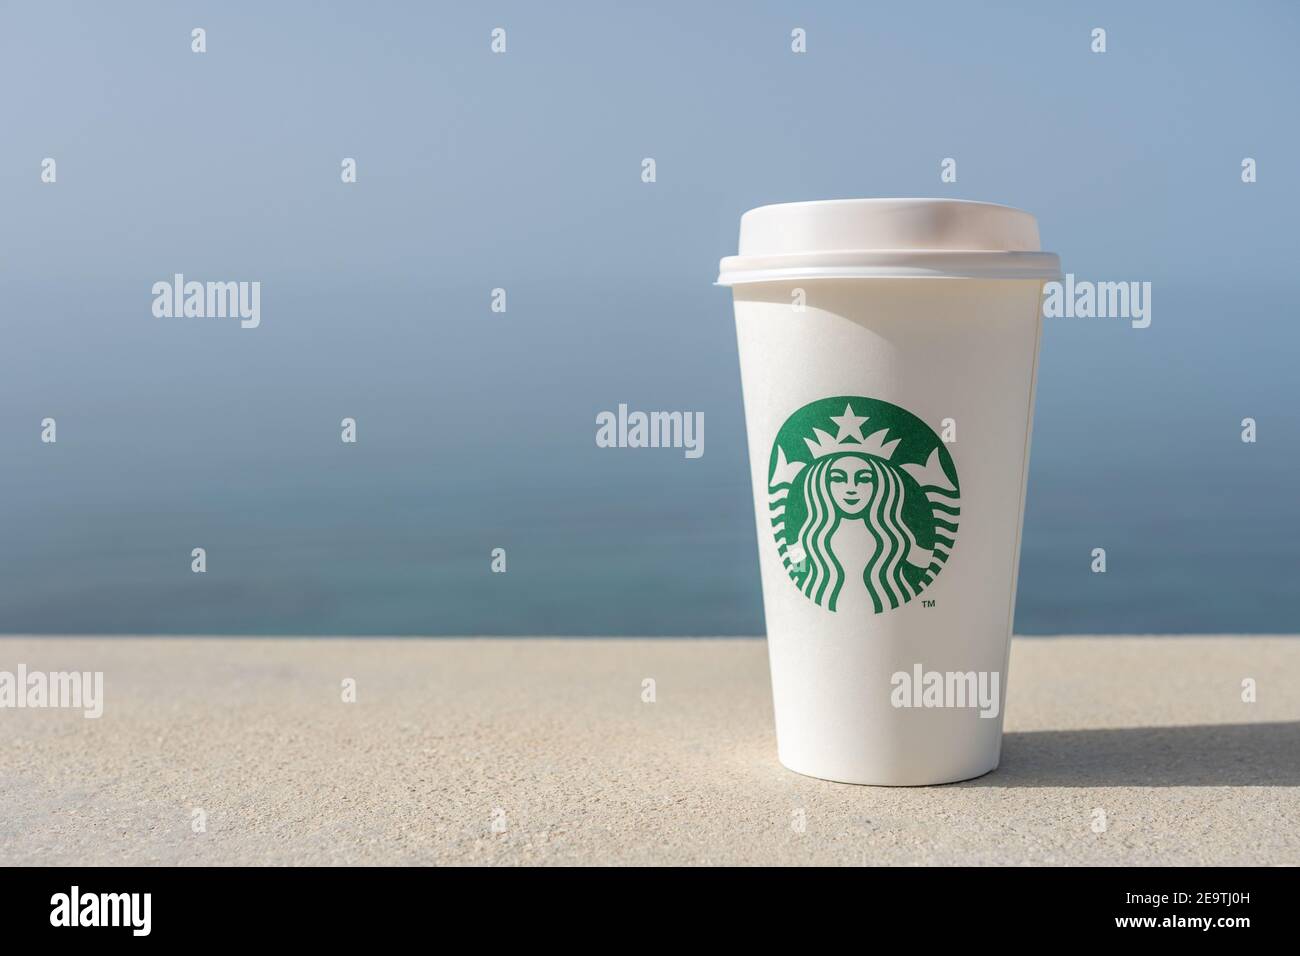 https://c8.alamy.com/comp/2E9TJ0H/heraklion-greece-may-16-2020-white-cup-of-coffee-with-starbucks-logo-on-sea-background-2E9TJ0H.jpg